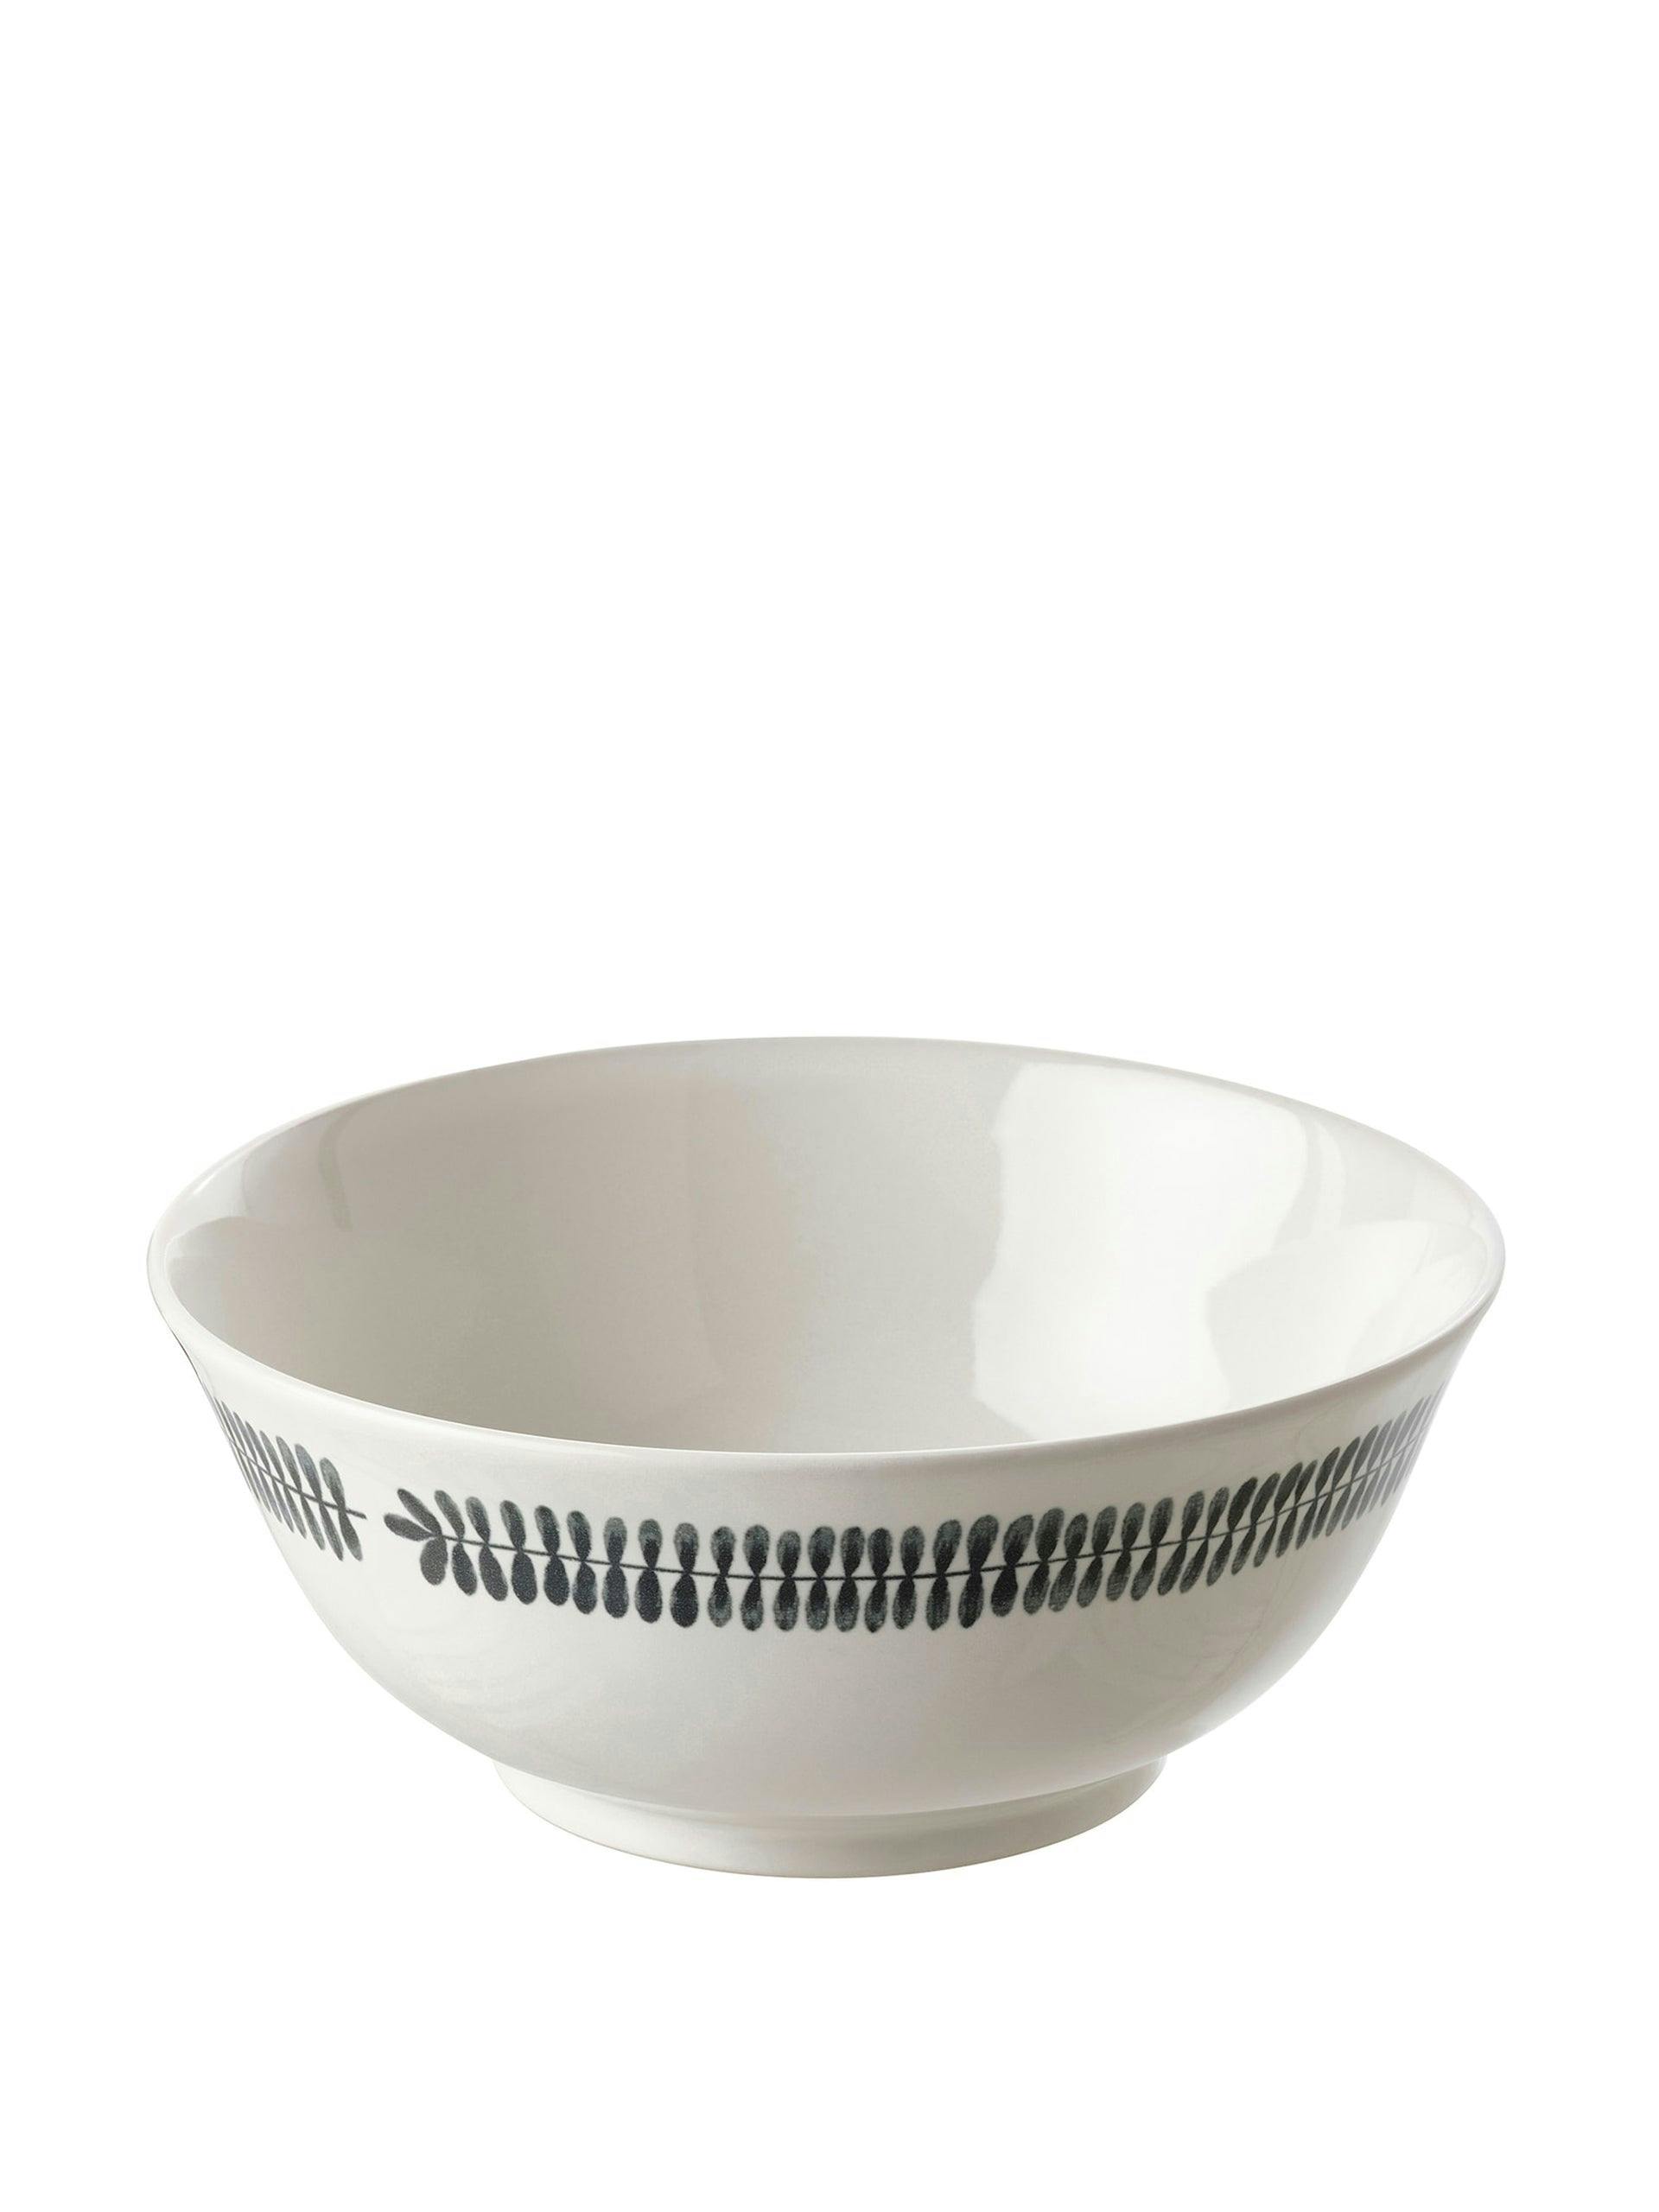 White patterned bowl